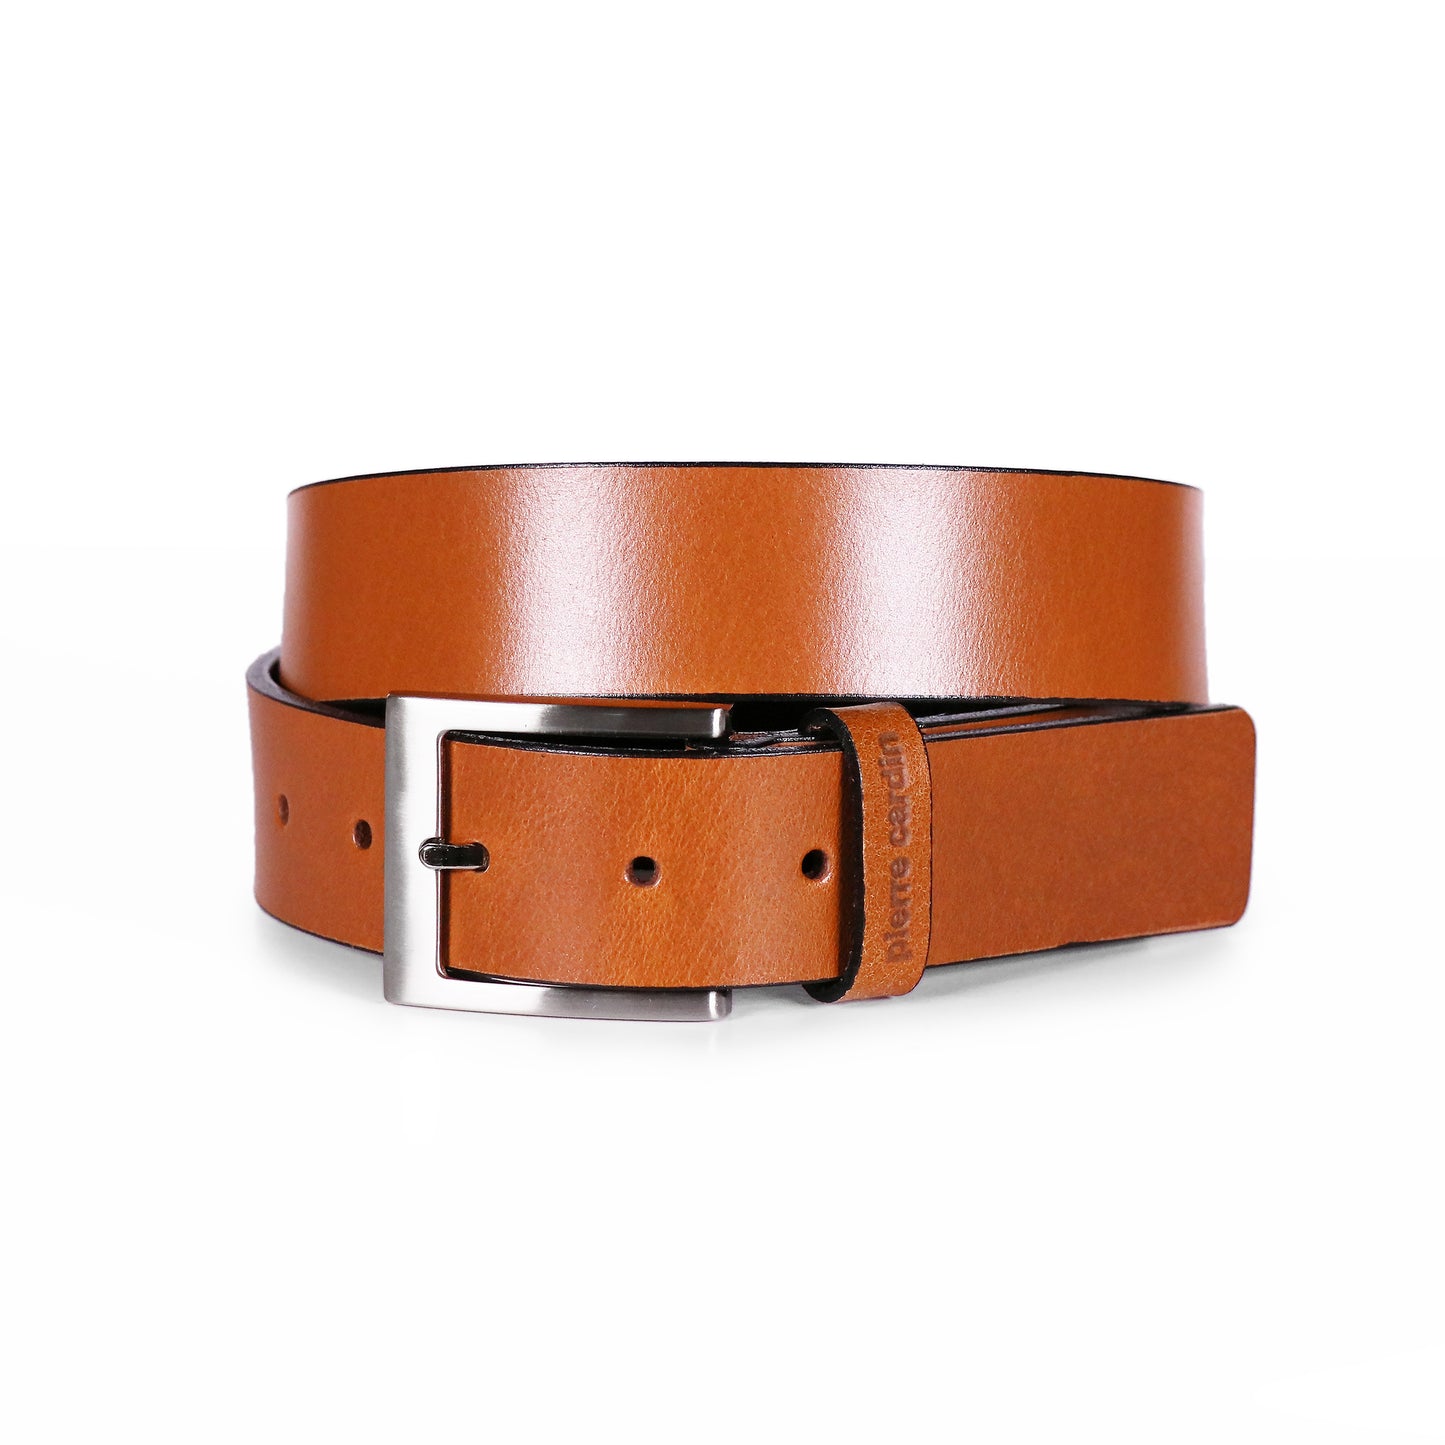 Pierre Cardin Leather Belt - Three Colour Options